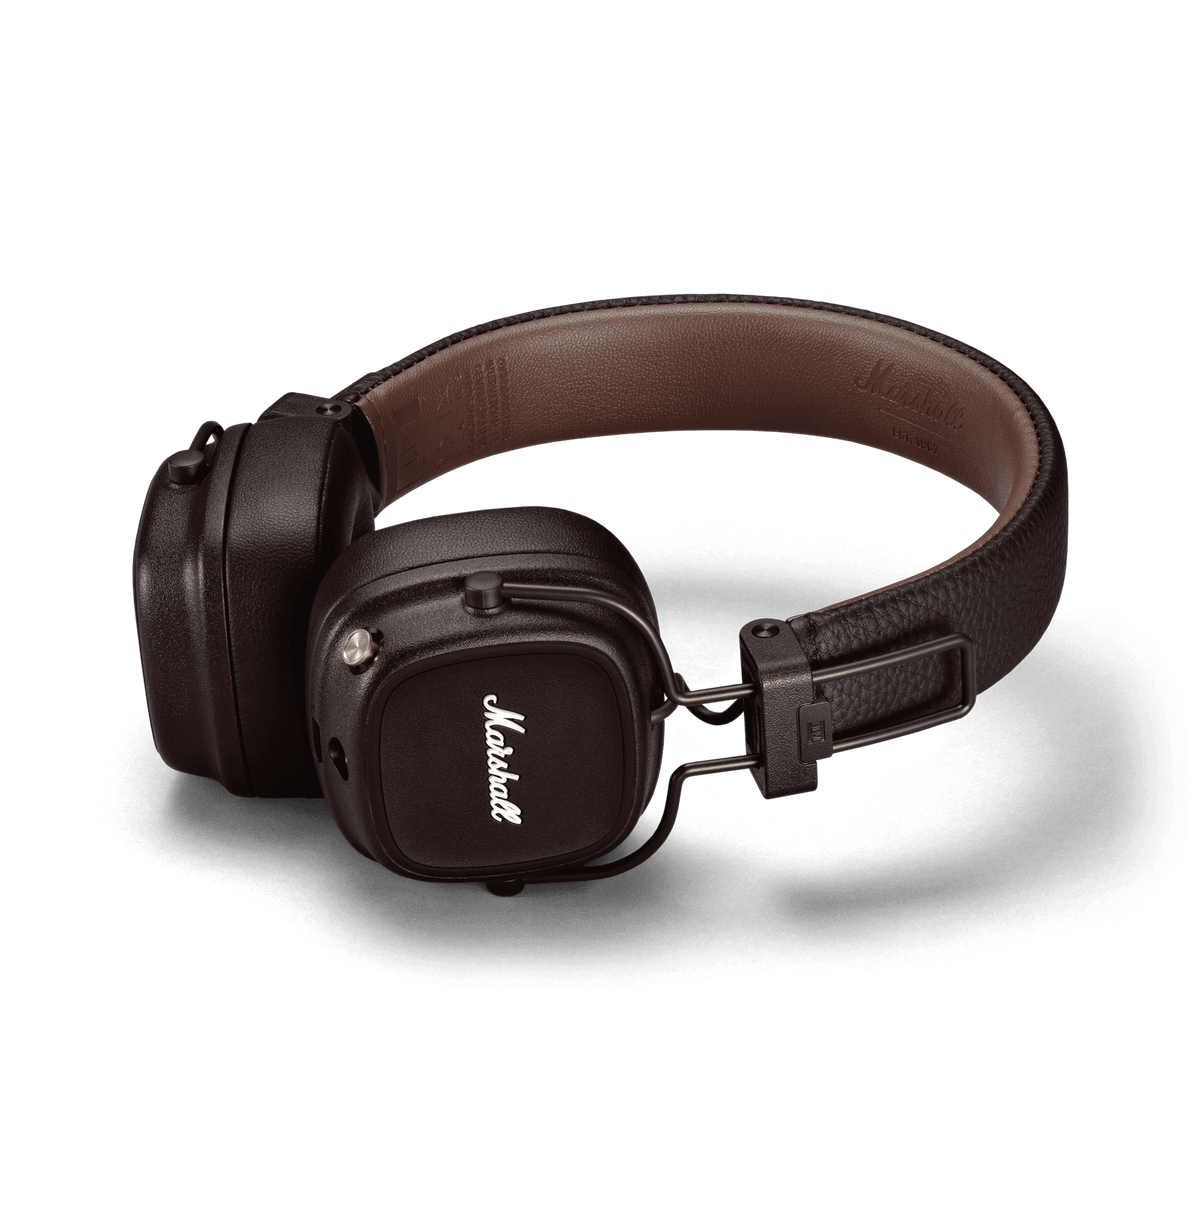 Marshall Major Iv Bluetooth Headphone Brown